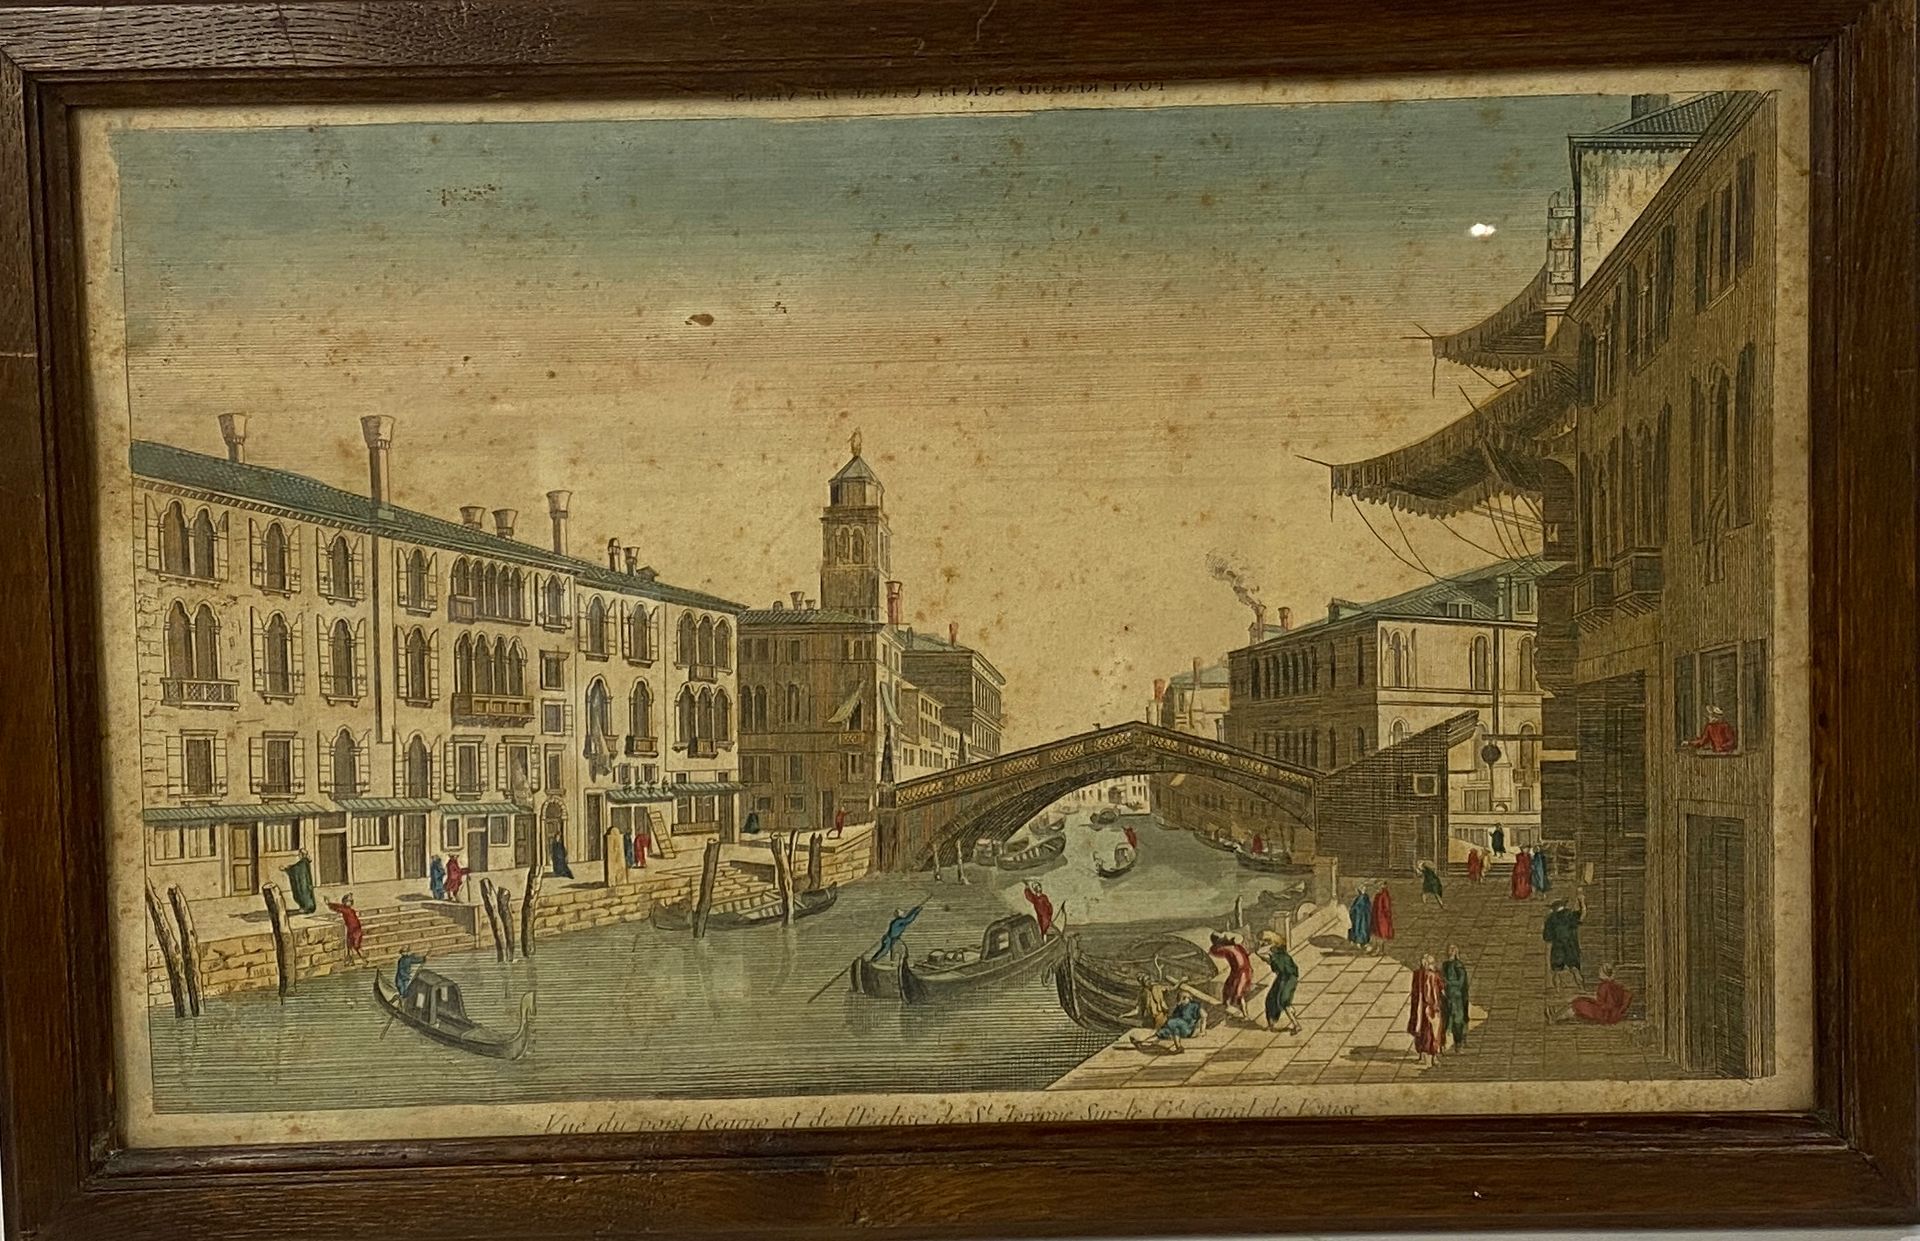 Null 彩色的光学视图

威尼斯的瑞吉欧桥景观

18世纪。

尺寸：26 x 43厘米